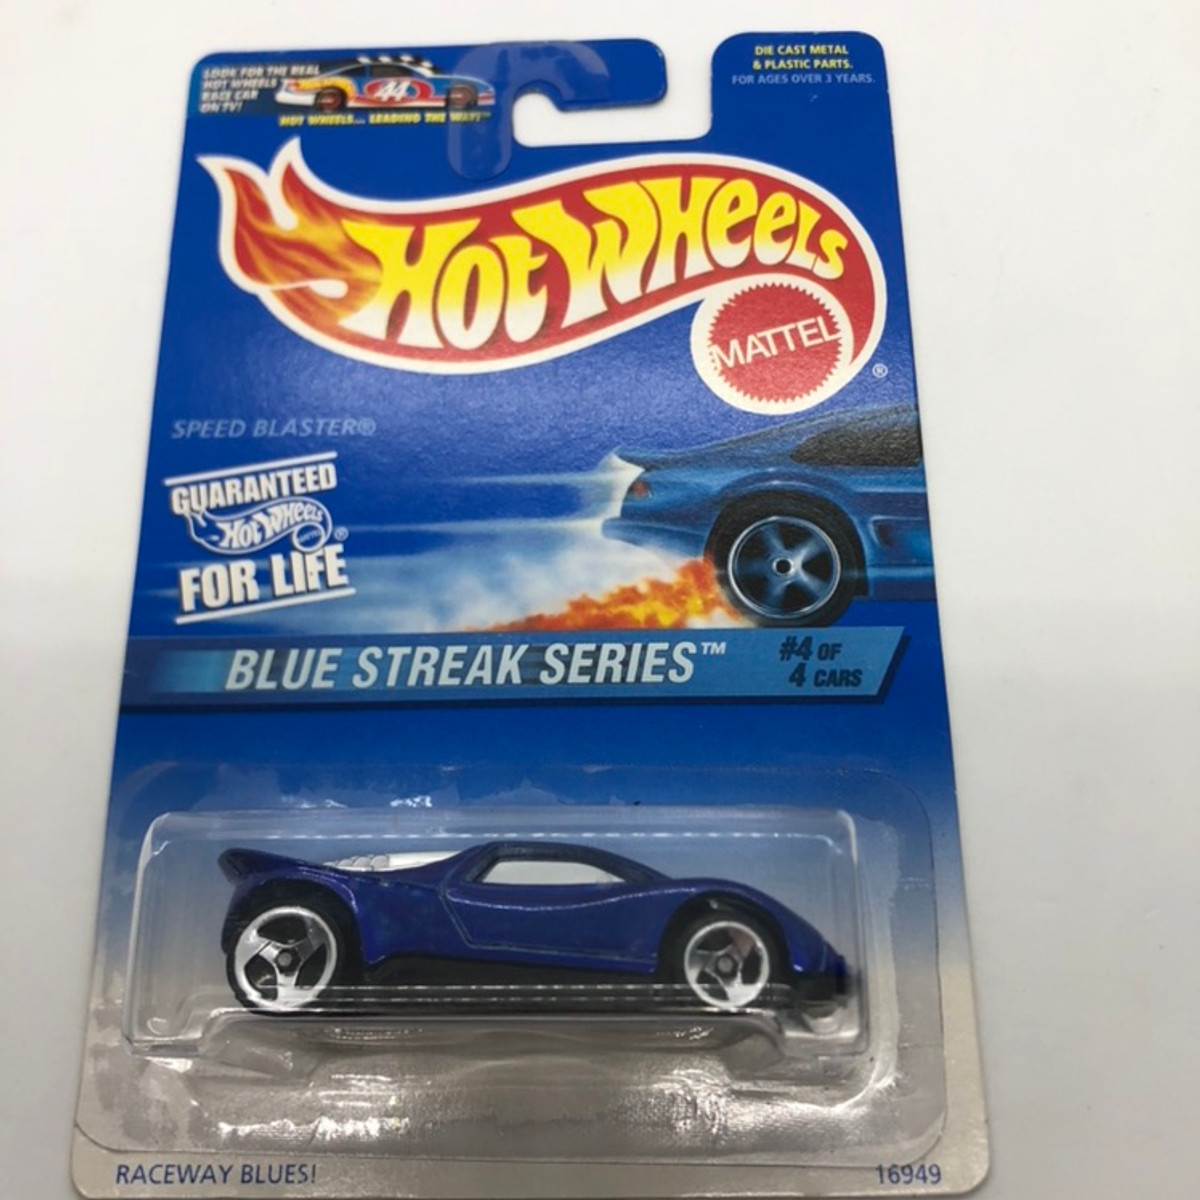 1997 Hot wheels Blue Streak Series Speed Blaster